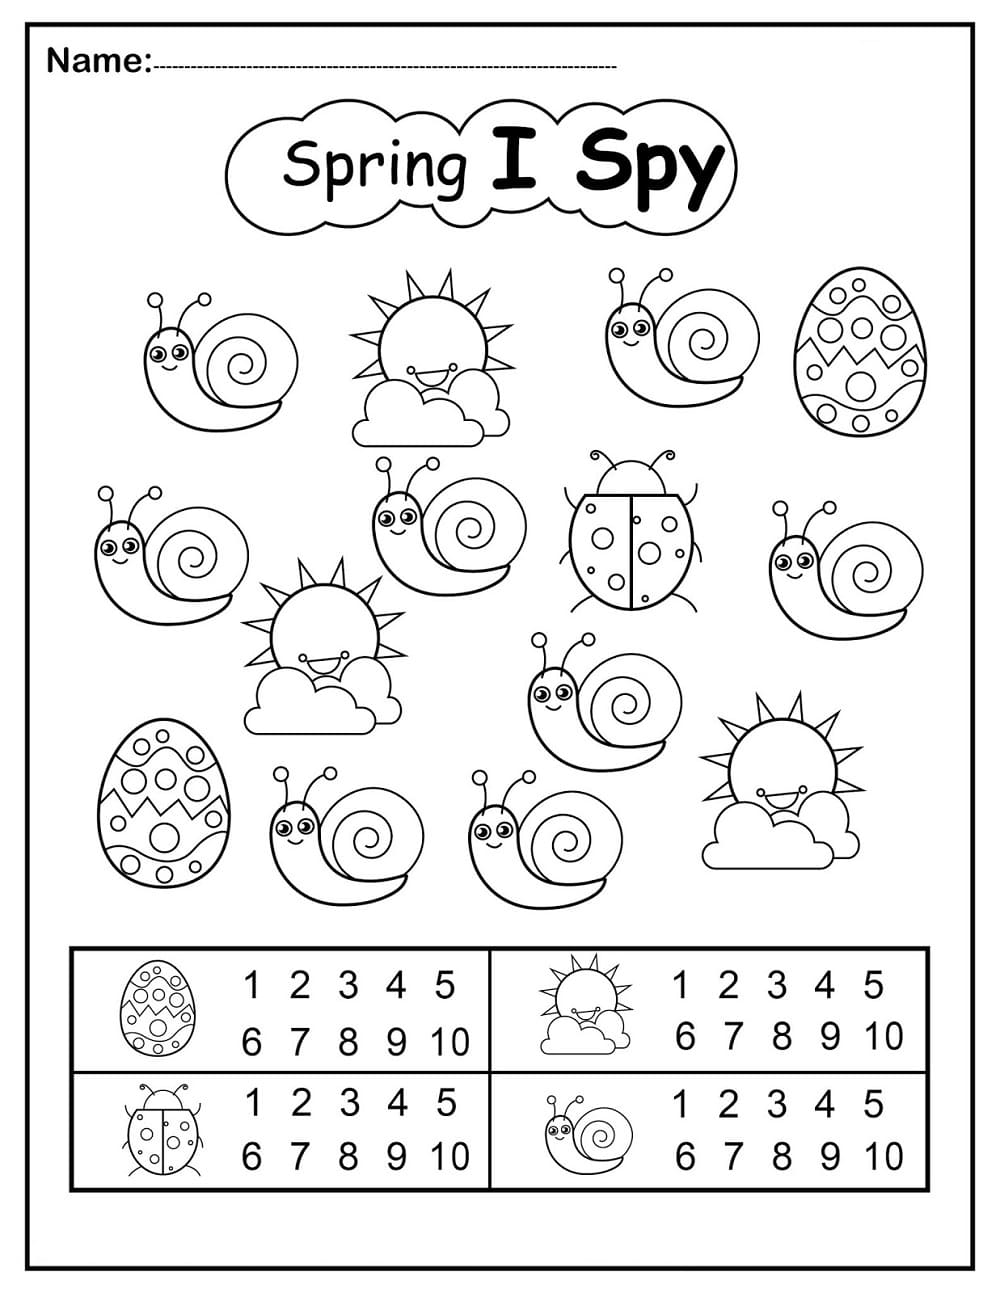 Printable Spring I Spy Download